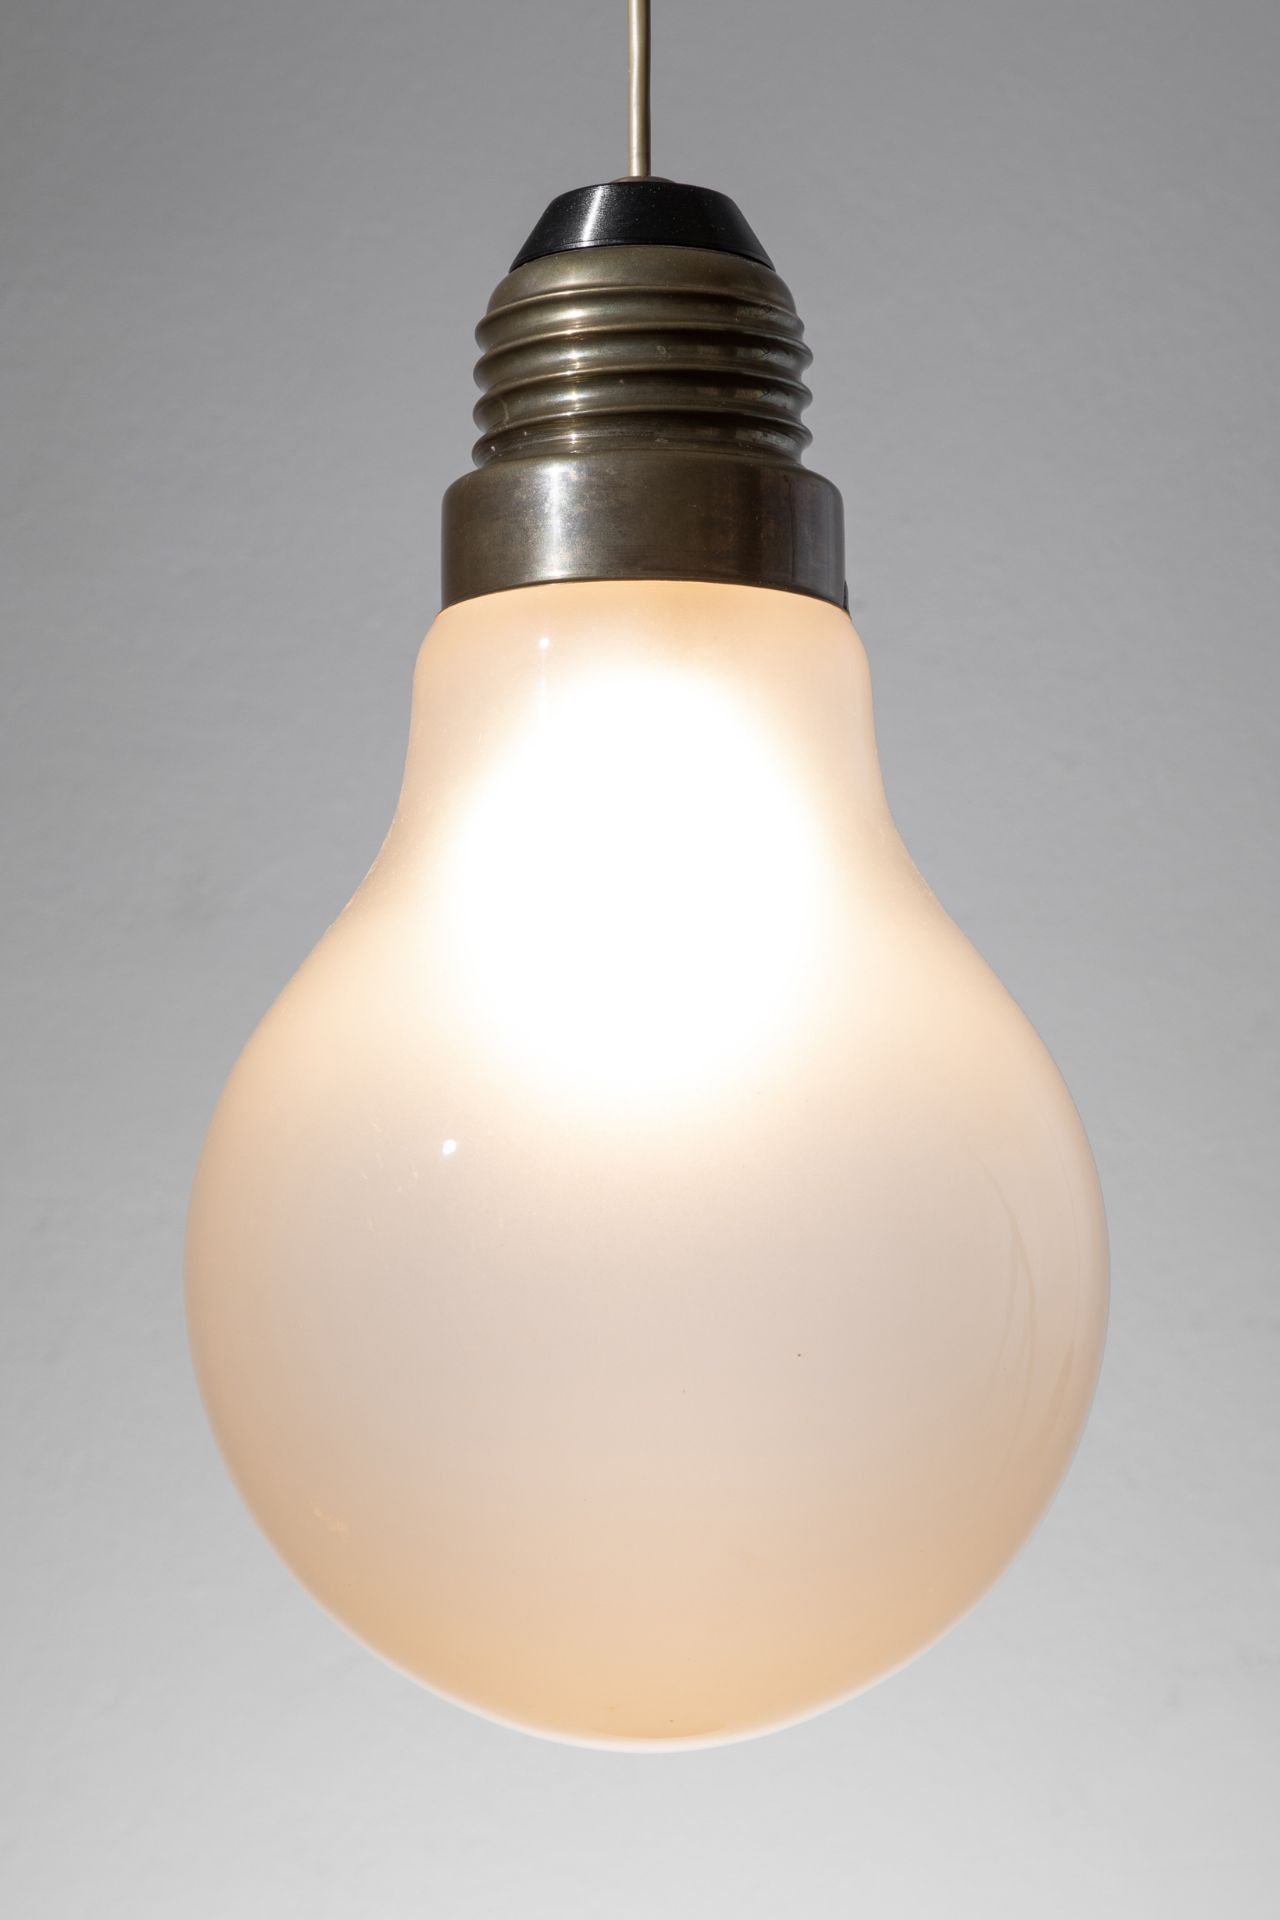 Ingo Maurer, Design M, Leuchte Modell Thomas Alva Edison - Bild 2 aus 4